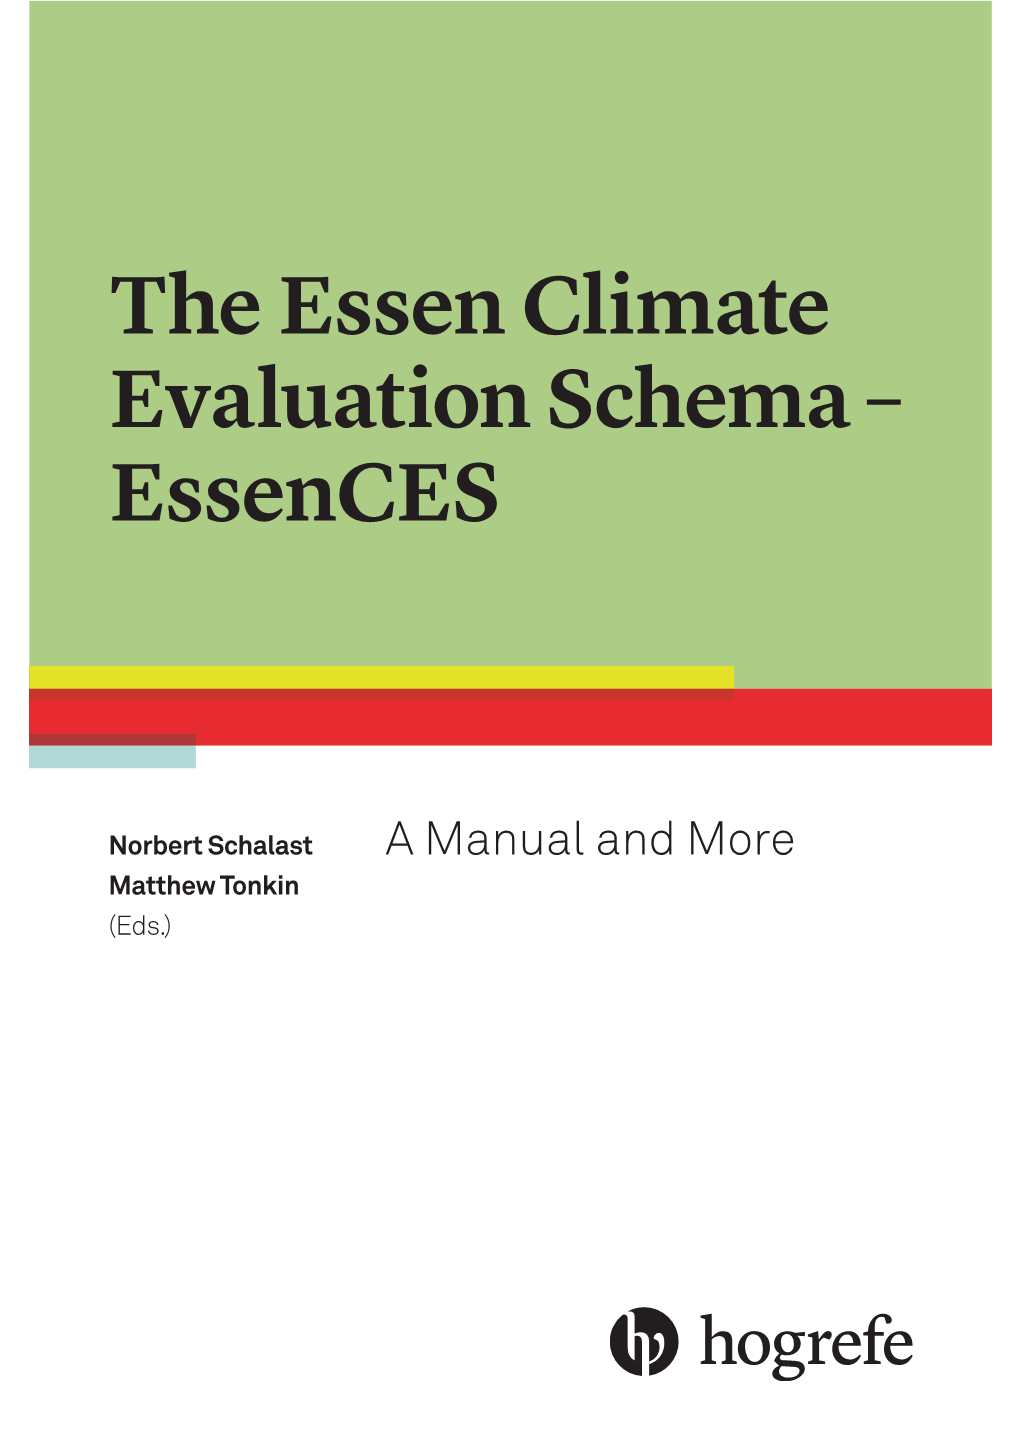 The Essen Climate Evaluation Schema – Essences the Essen Climate Evaluation Schema Essences Norbert Schalast a Manual and More Matthew Tonkin (Eds.) Essences